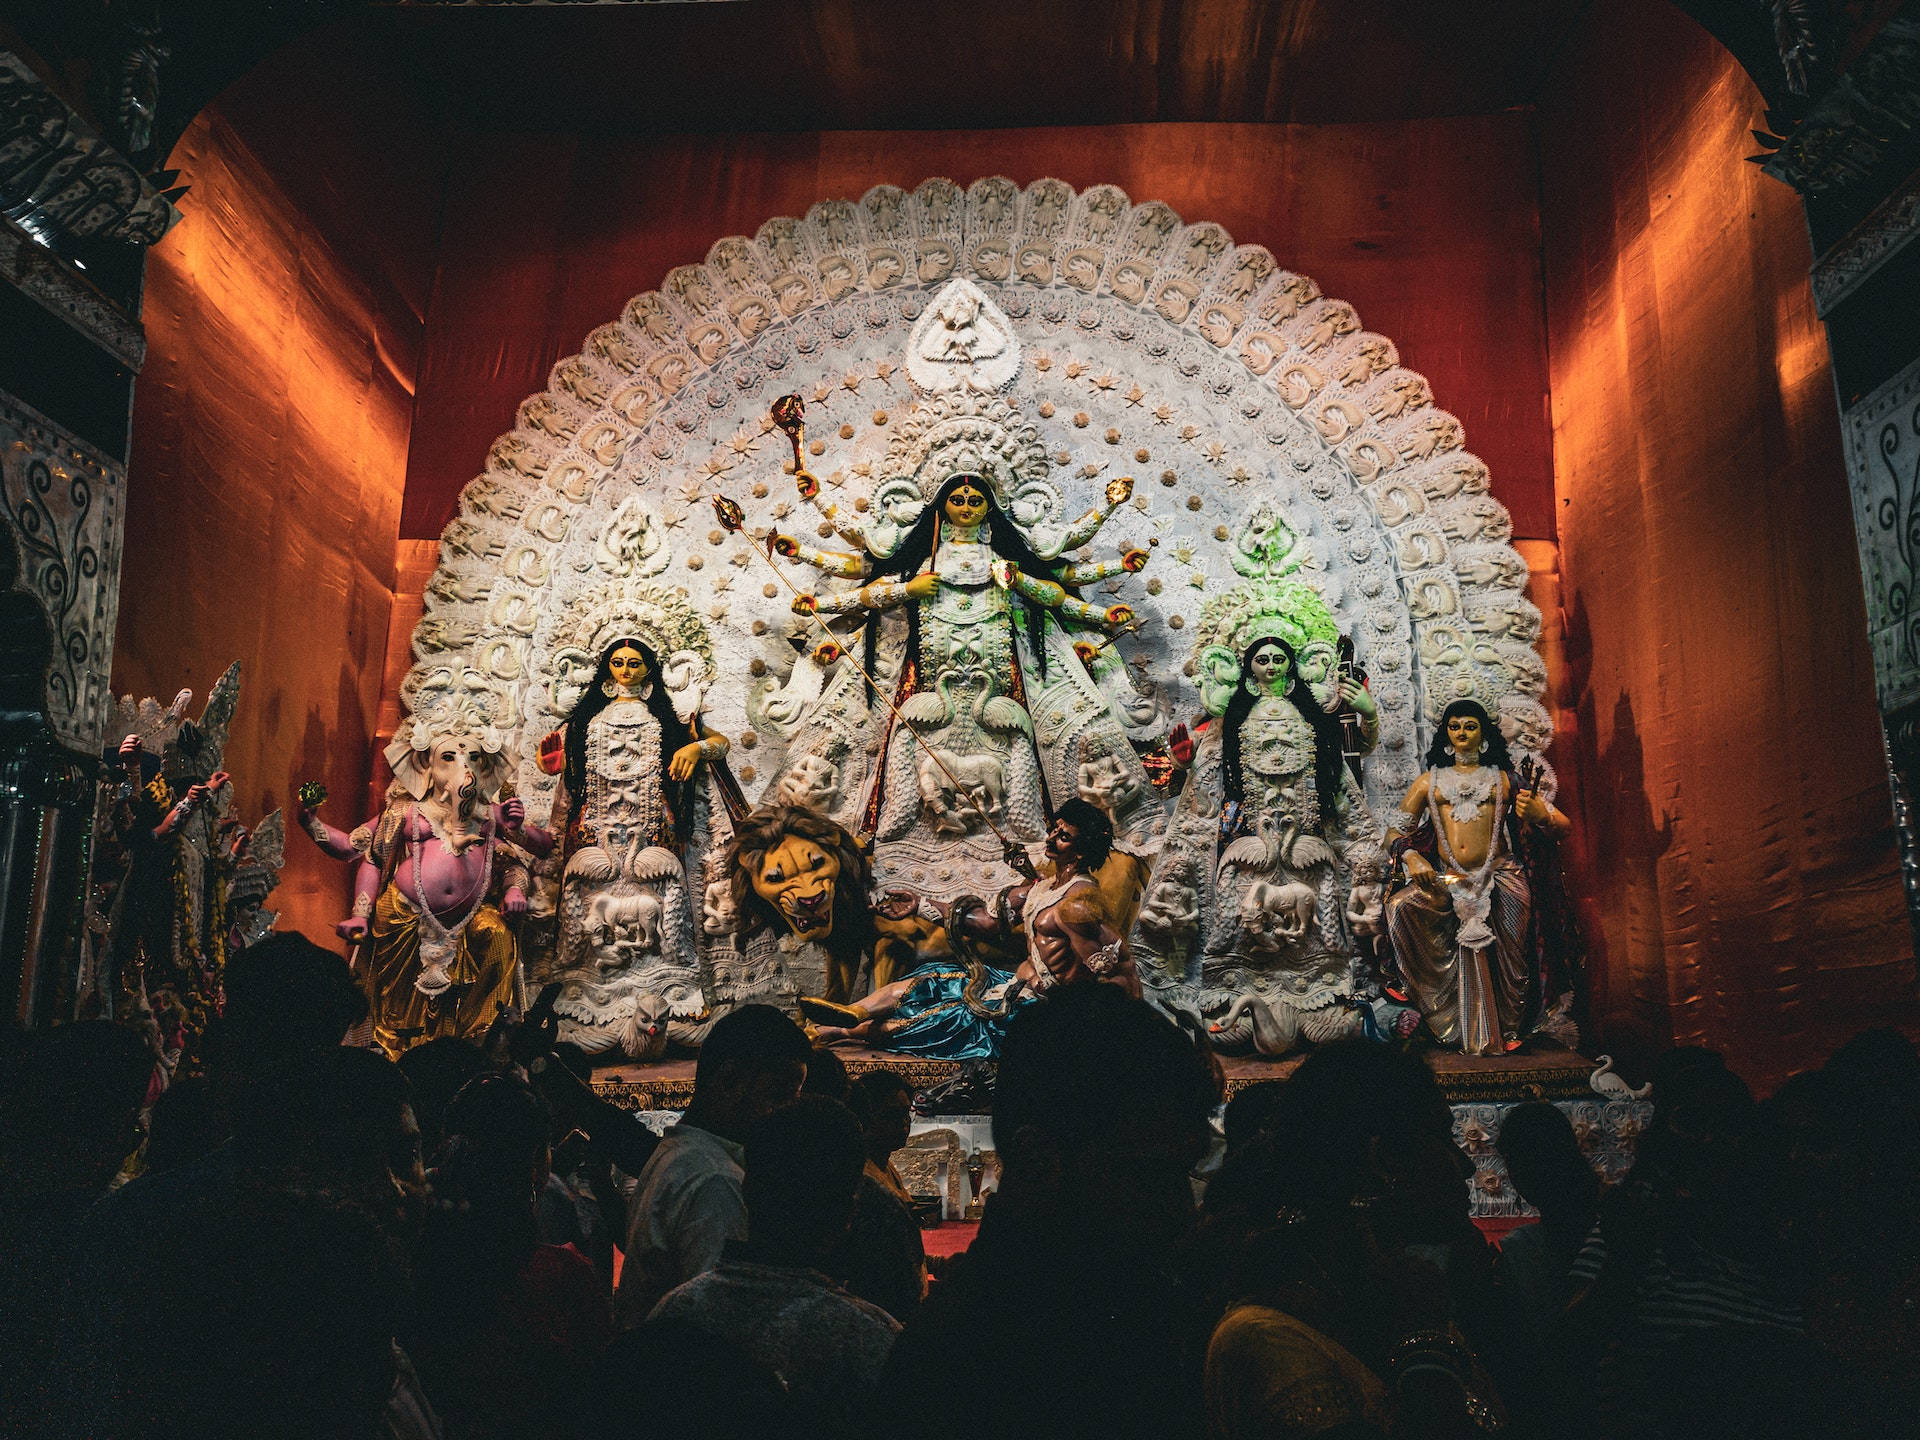 Caption: Divine Image of Hindu Goddess Durga Wallpaper